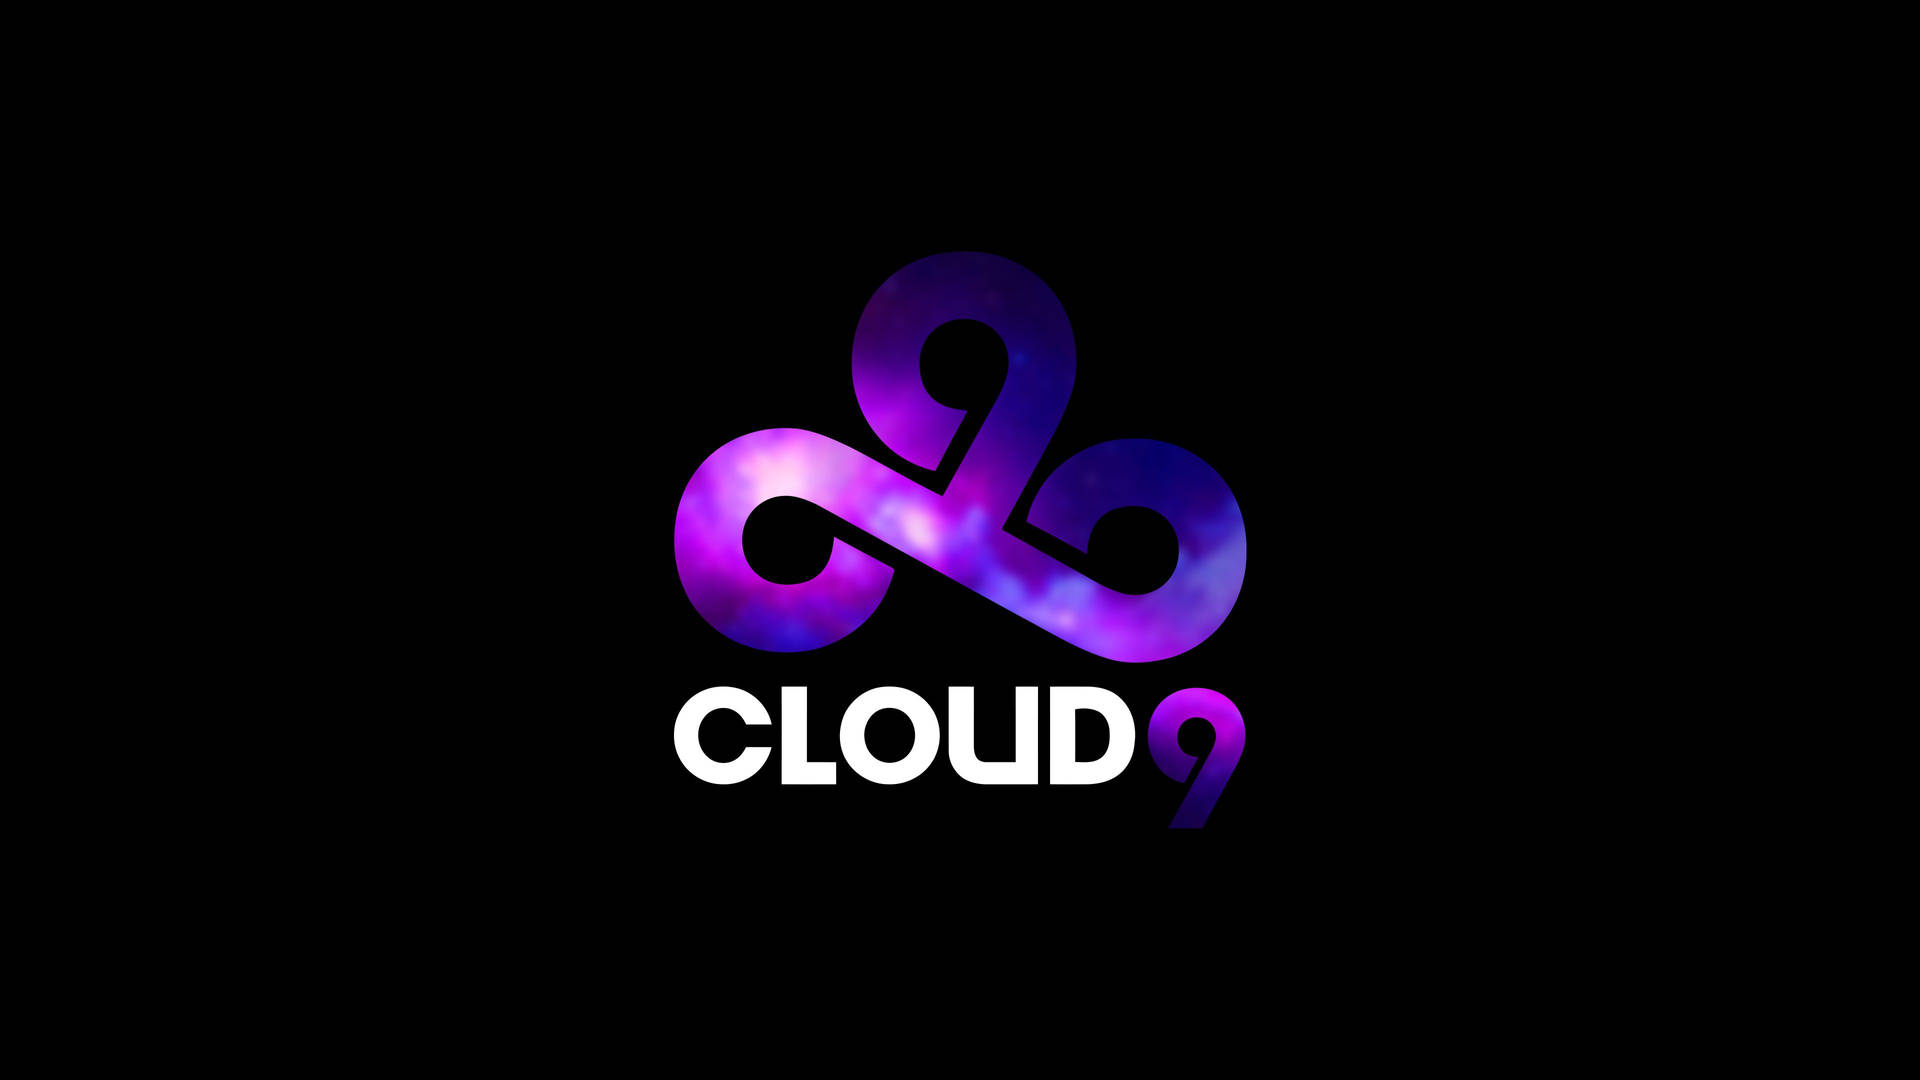 Deep Space Purple Cloud9 Logo Wallpaper